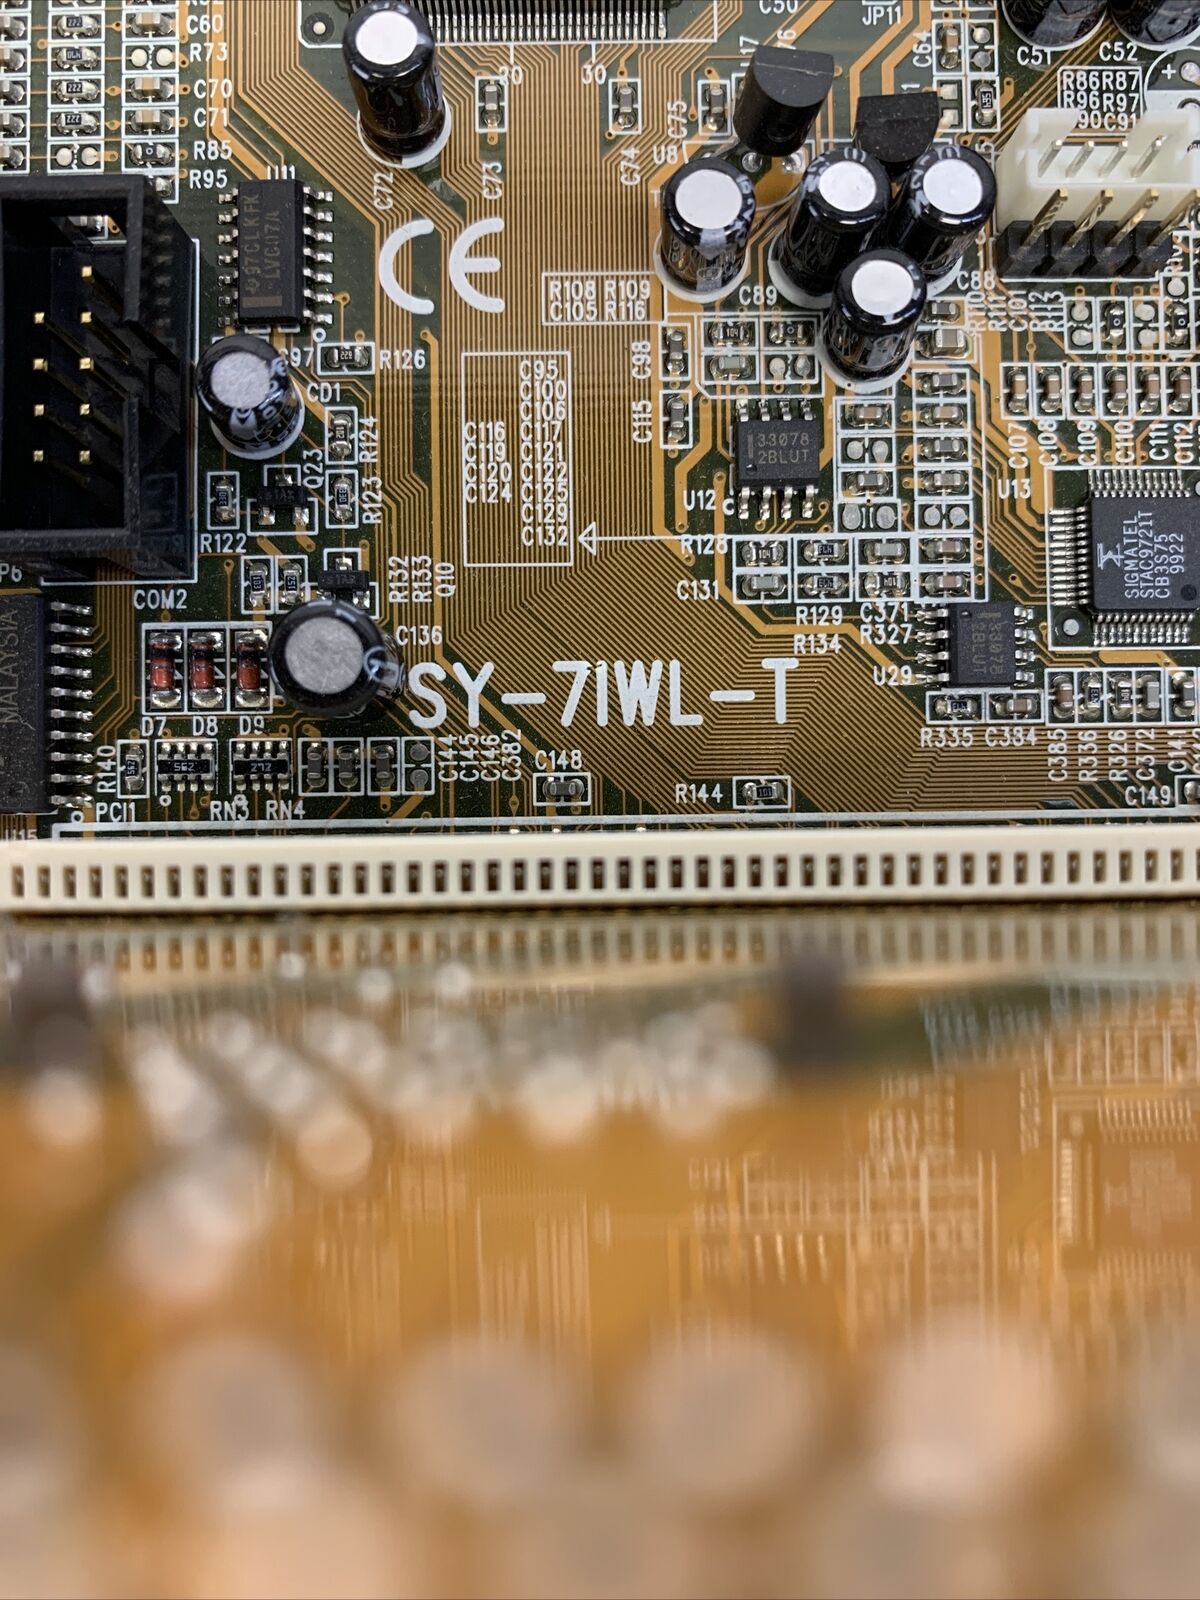 Soyo SY-71WL-T (LI-7000) Motherboard Intel Celeron 400MHz 32MB RAM